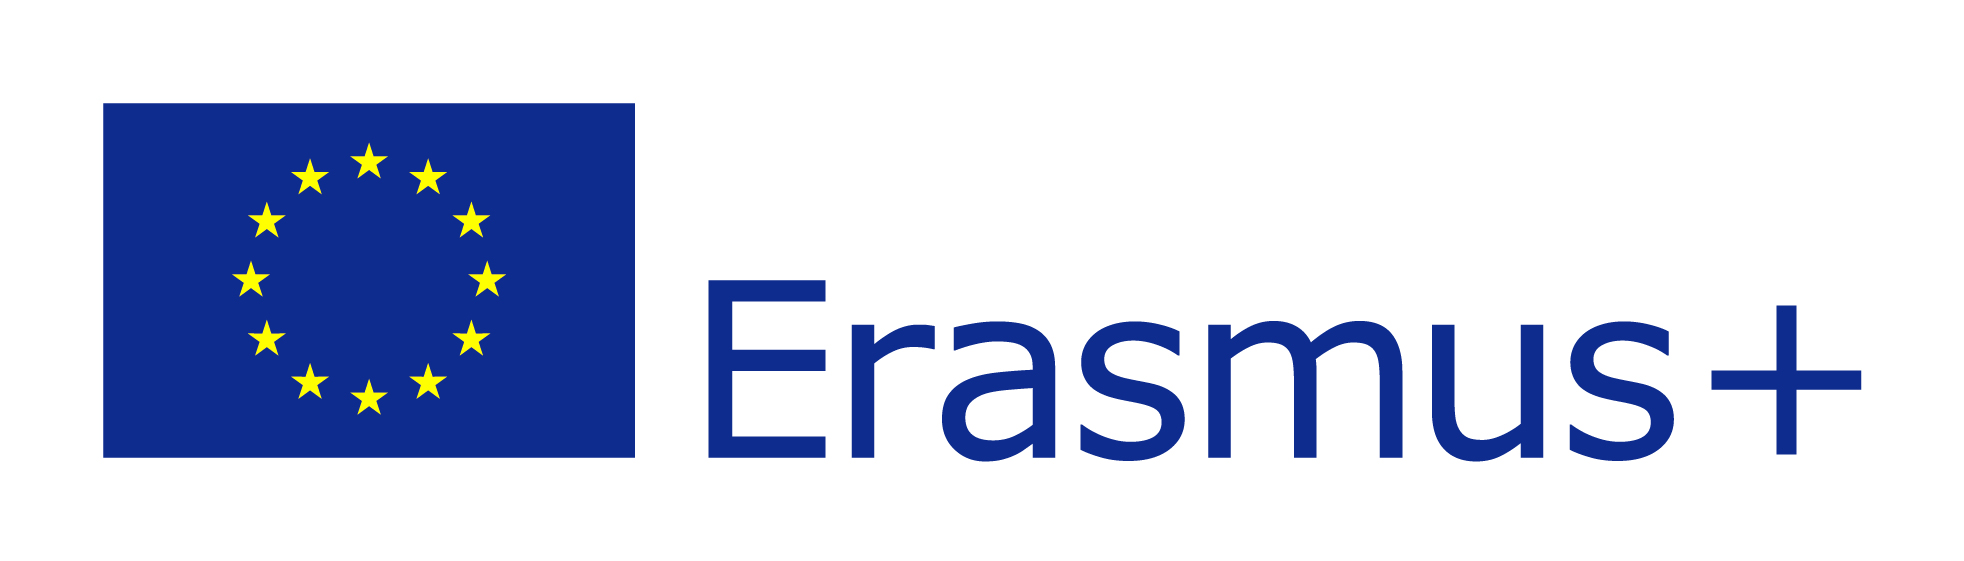  Erasmus+ (logo)